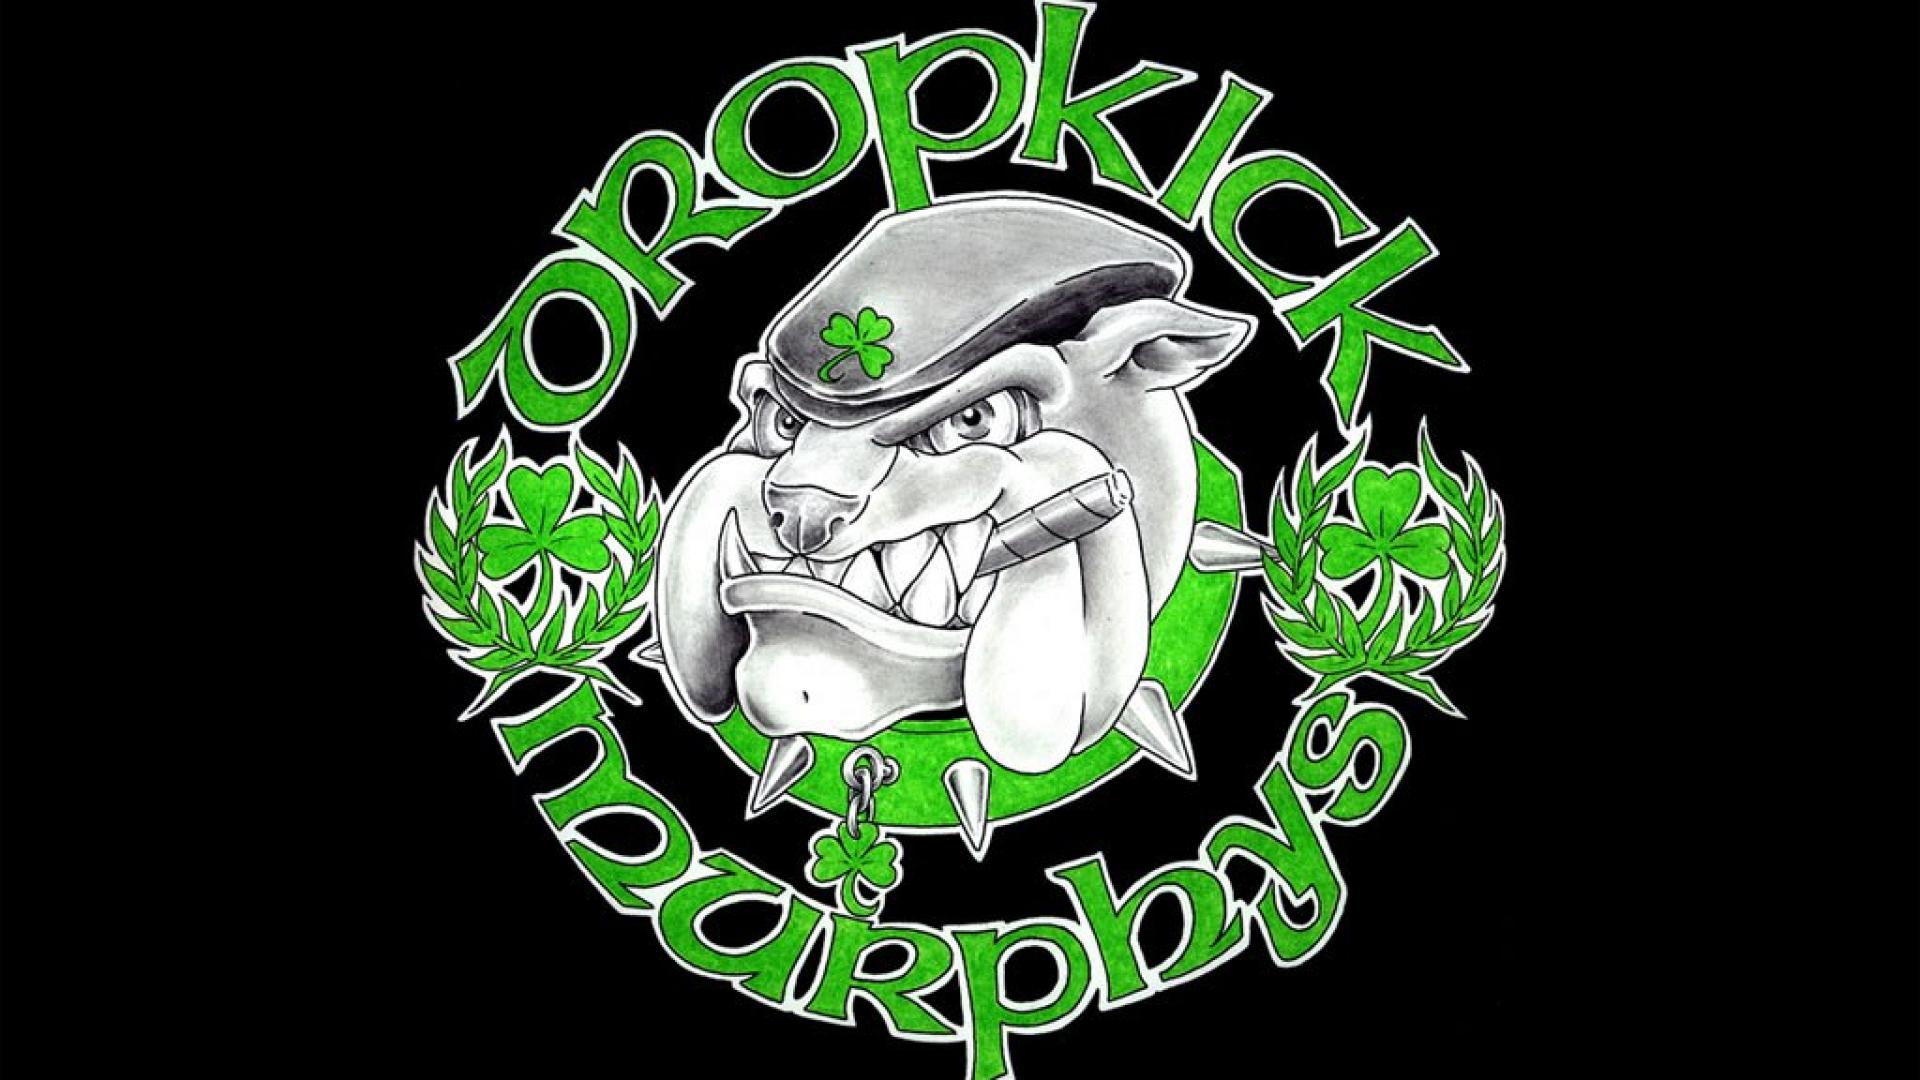 Dropkick murphys official hd wallpaper - - HQ Desktop